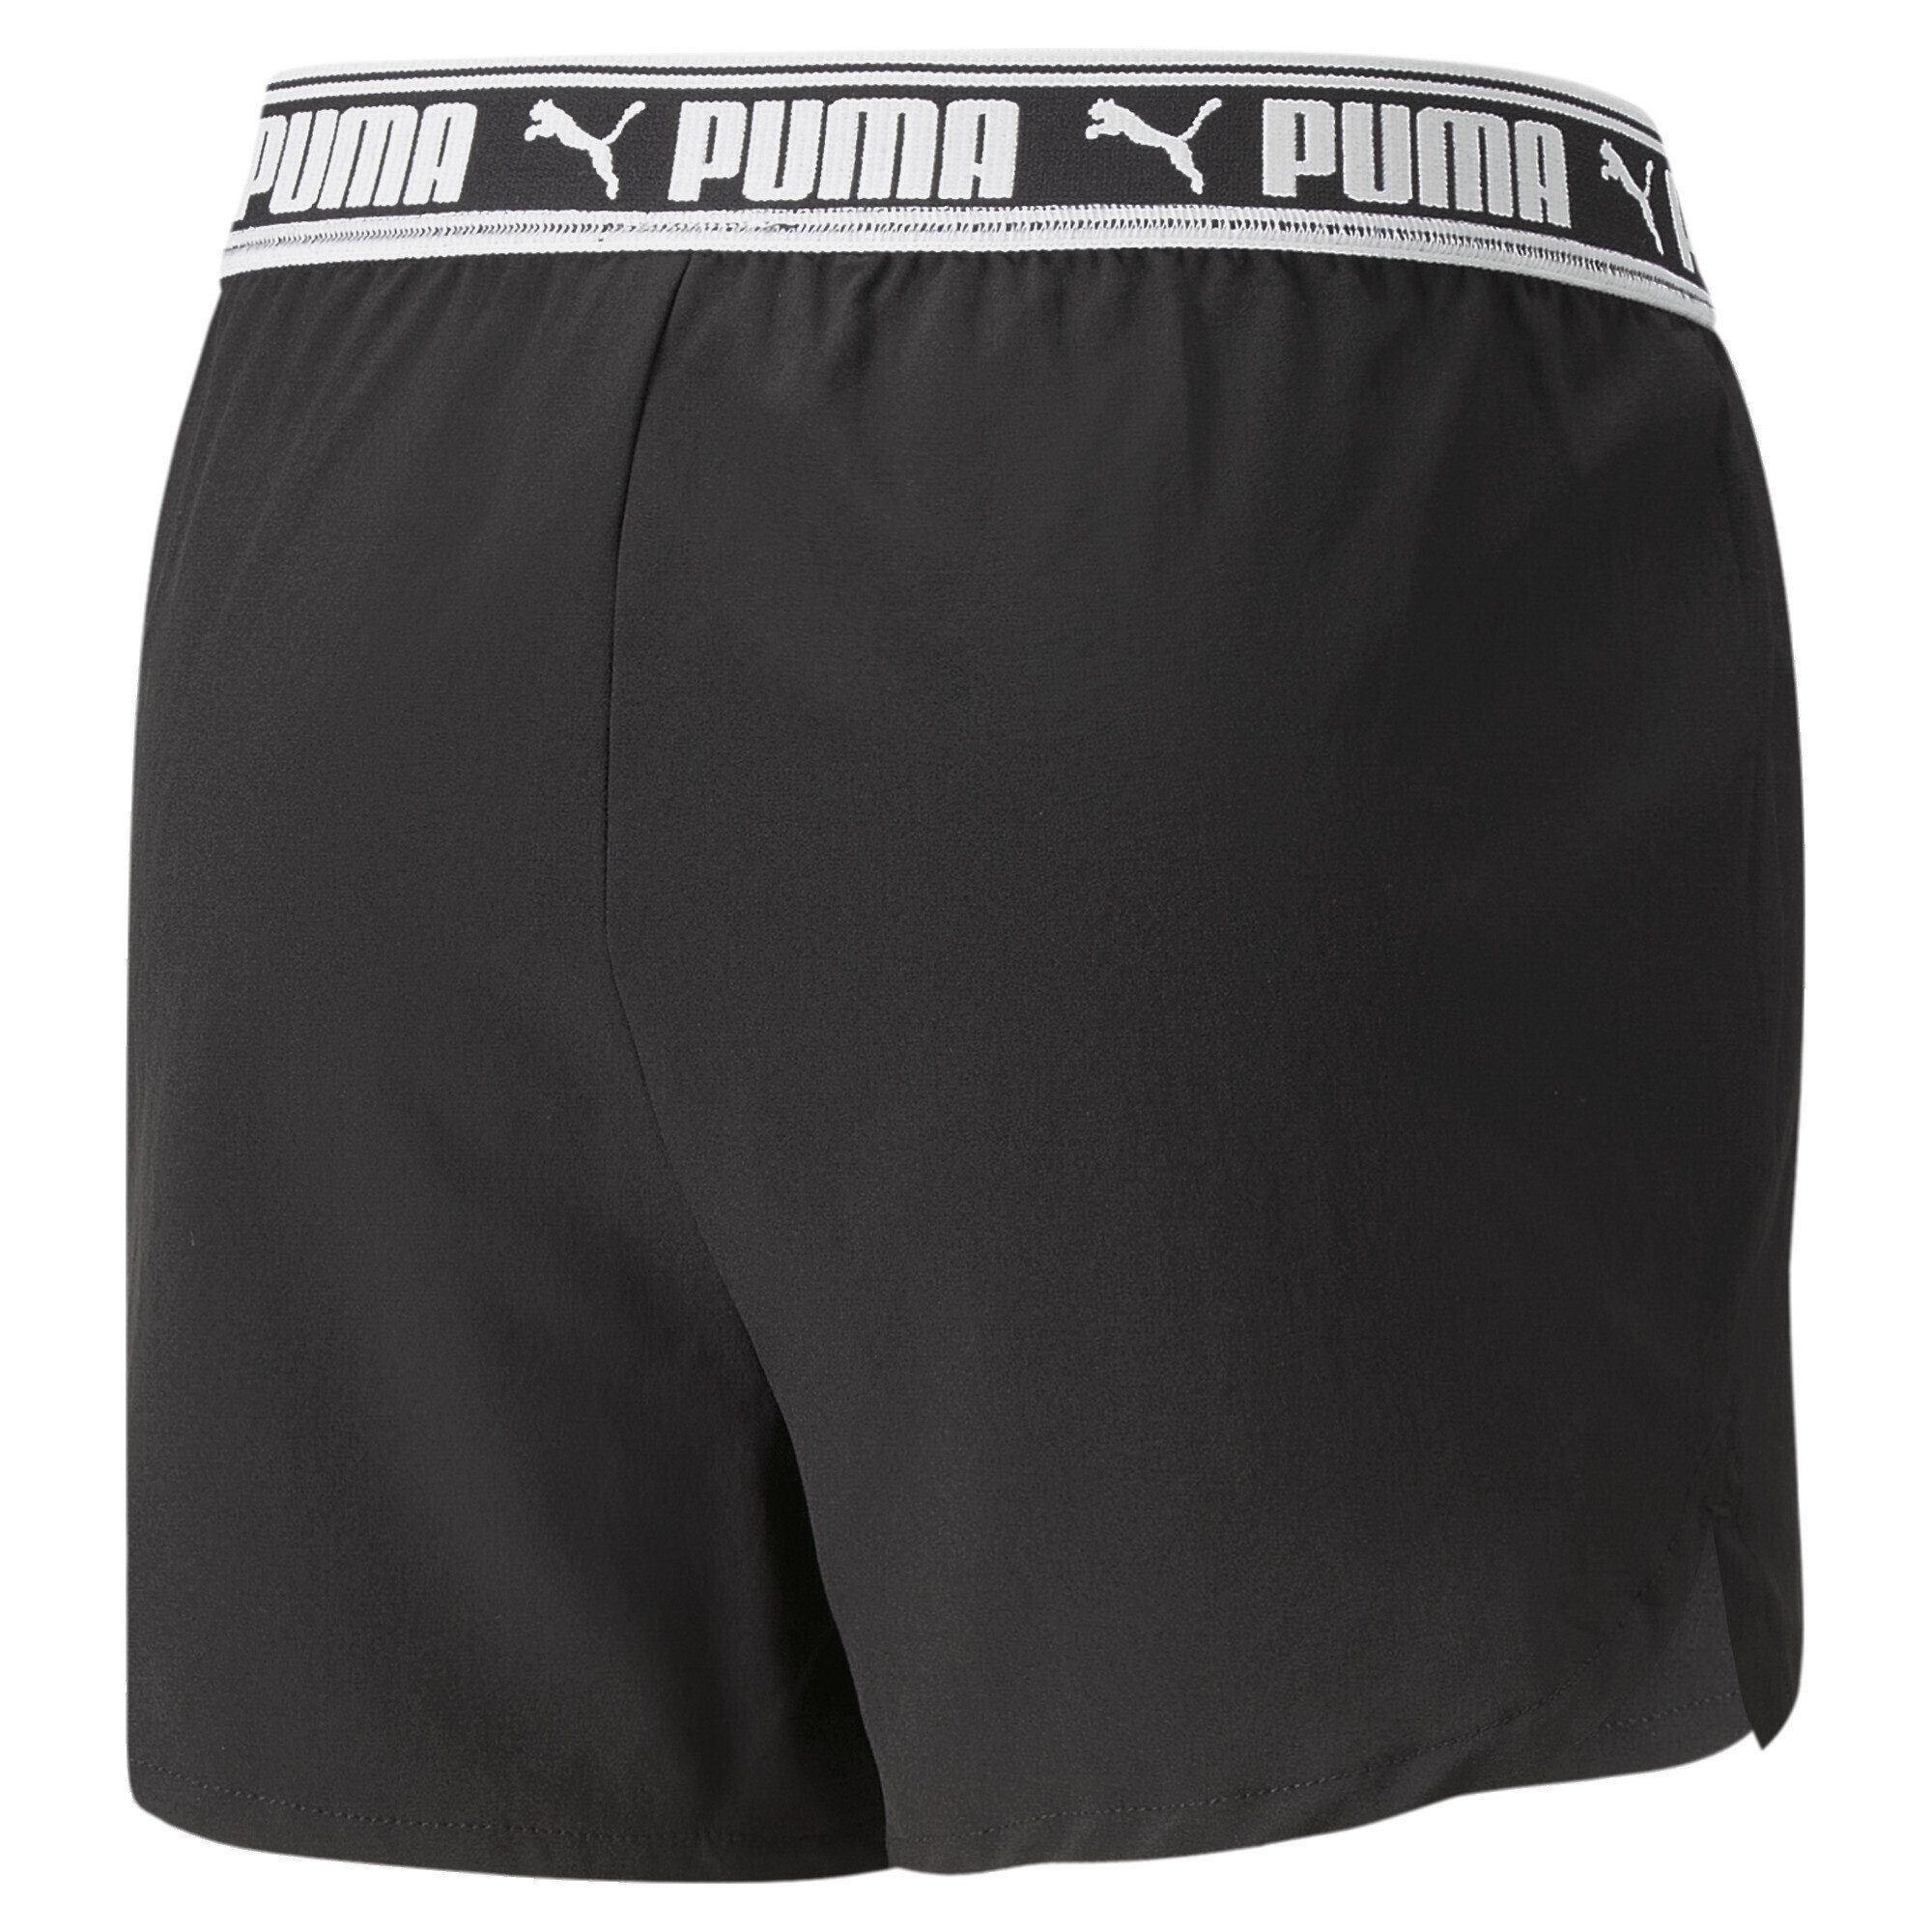 PUMA Laufshorts Strong Black Woven Jugendliche Shorts